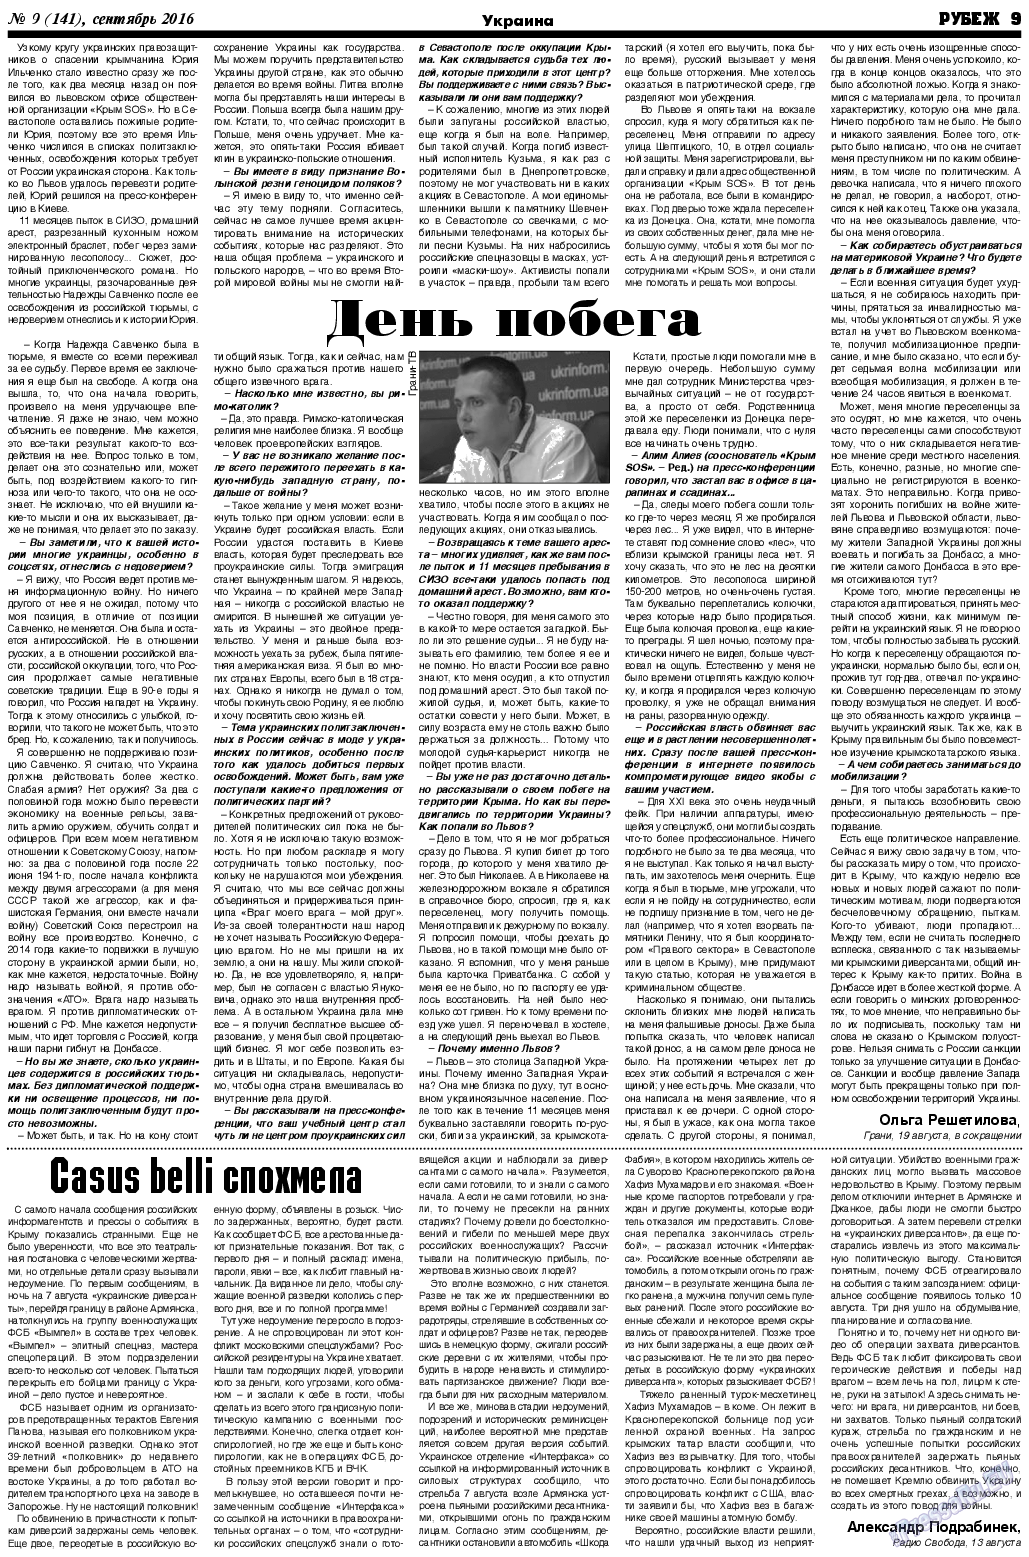 Рубеж, газета. 2016 №9 стр.9